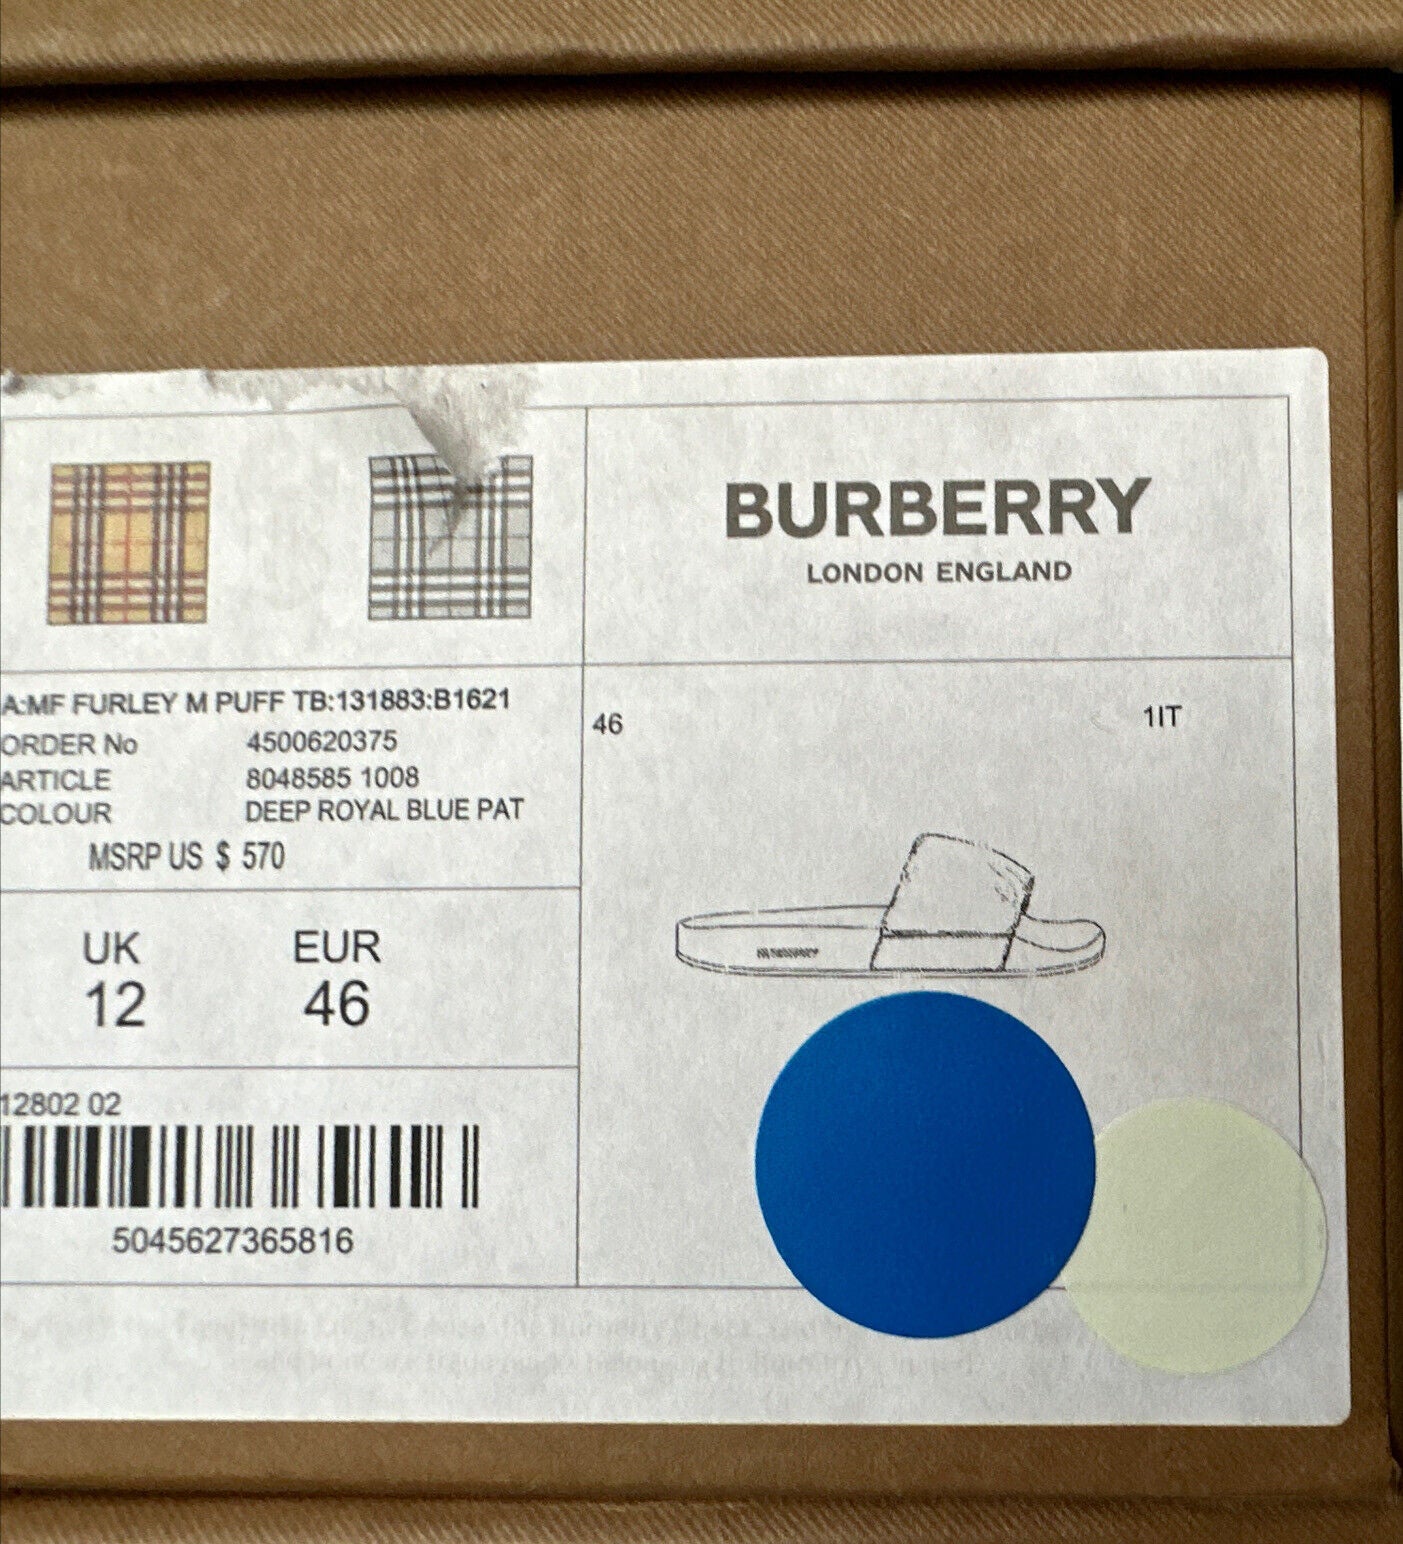 Мужские шлепанцы Burberry Furley Puff TB за 570 долларов США, синие сандалии 13 США (46) 8048585 